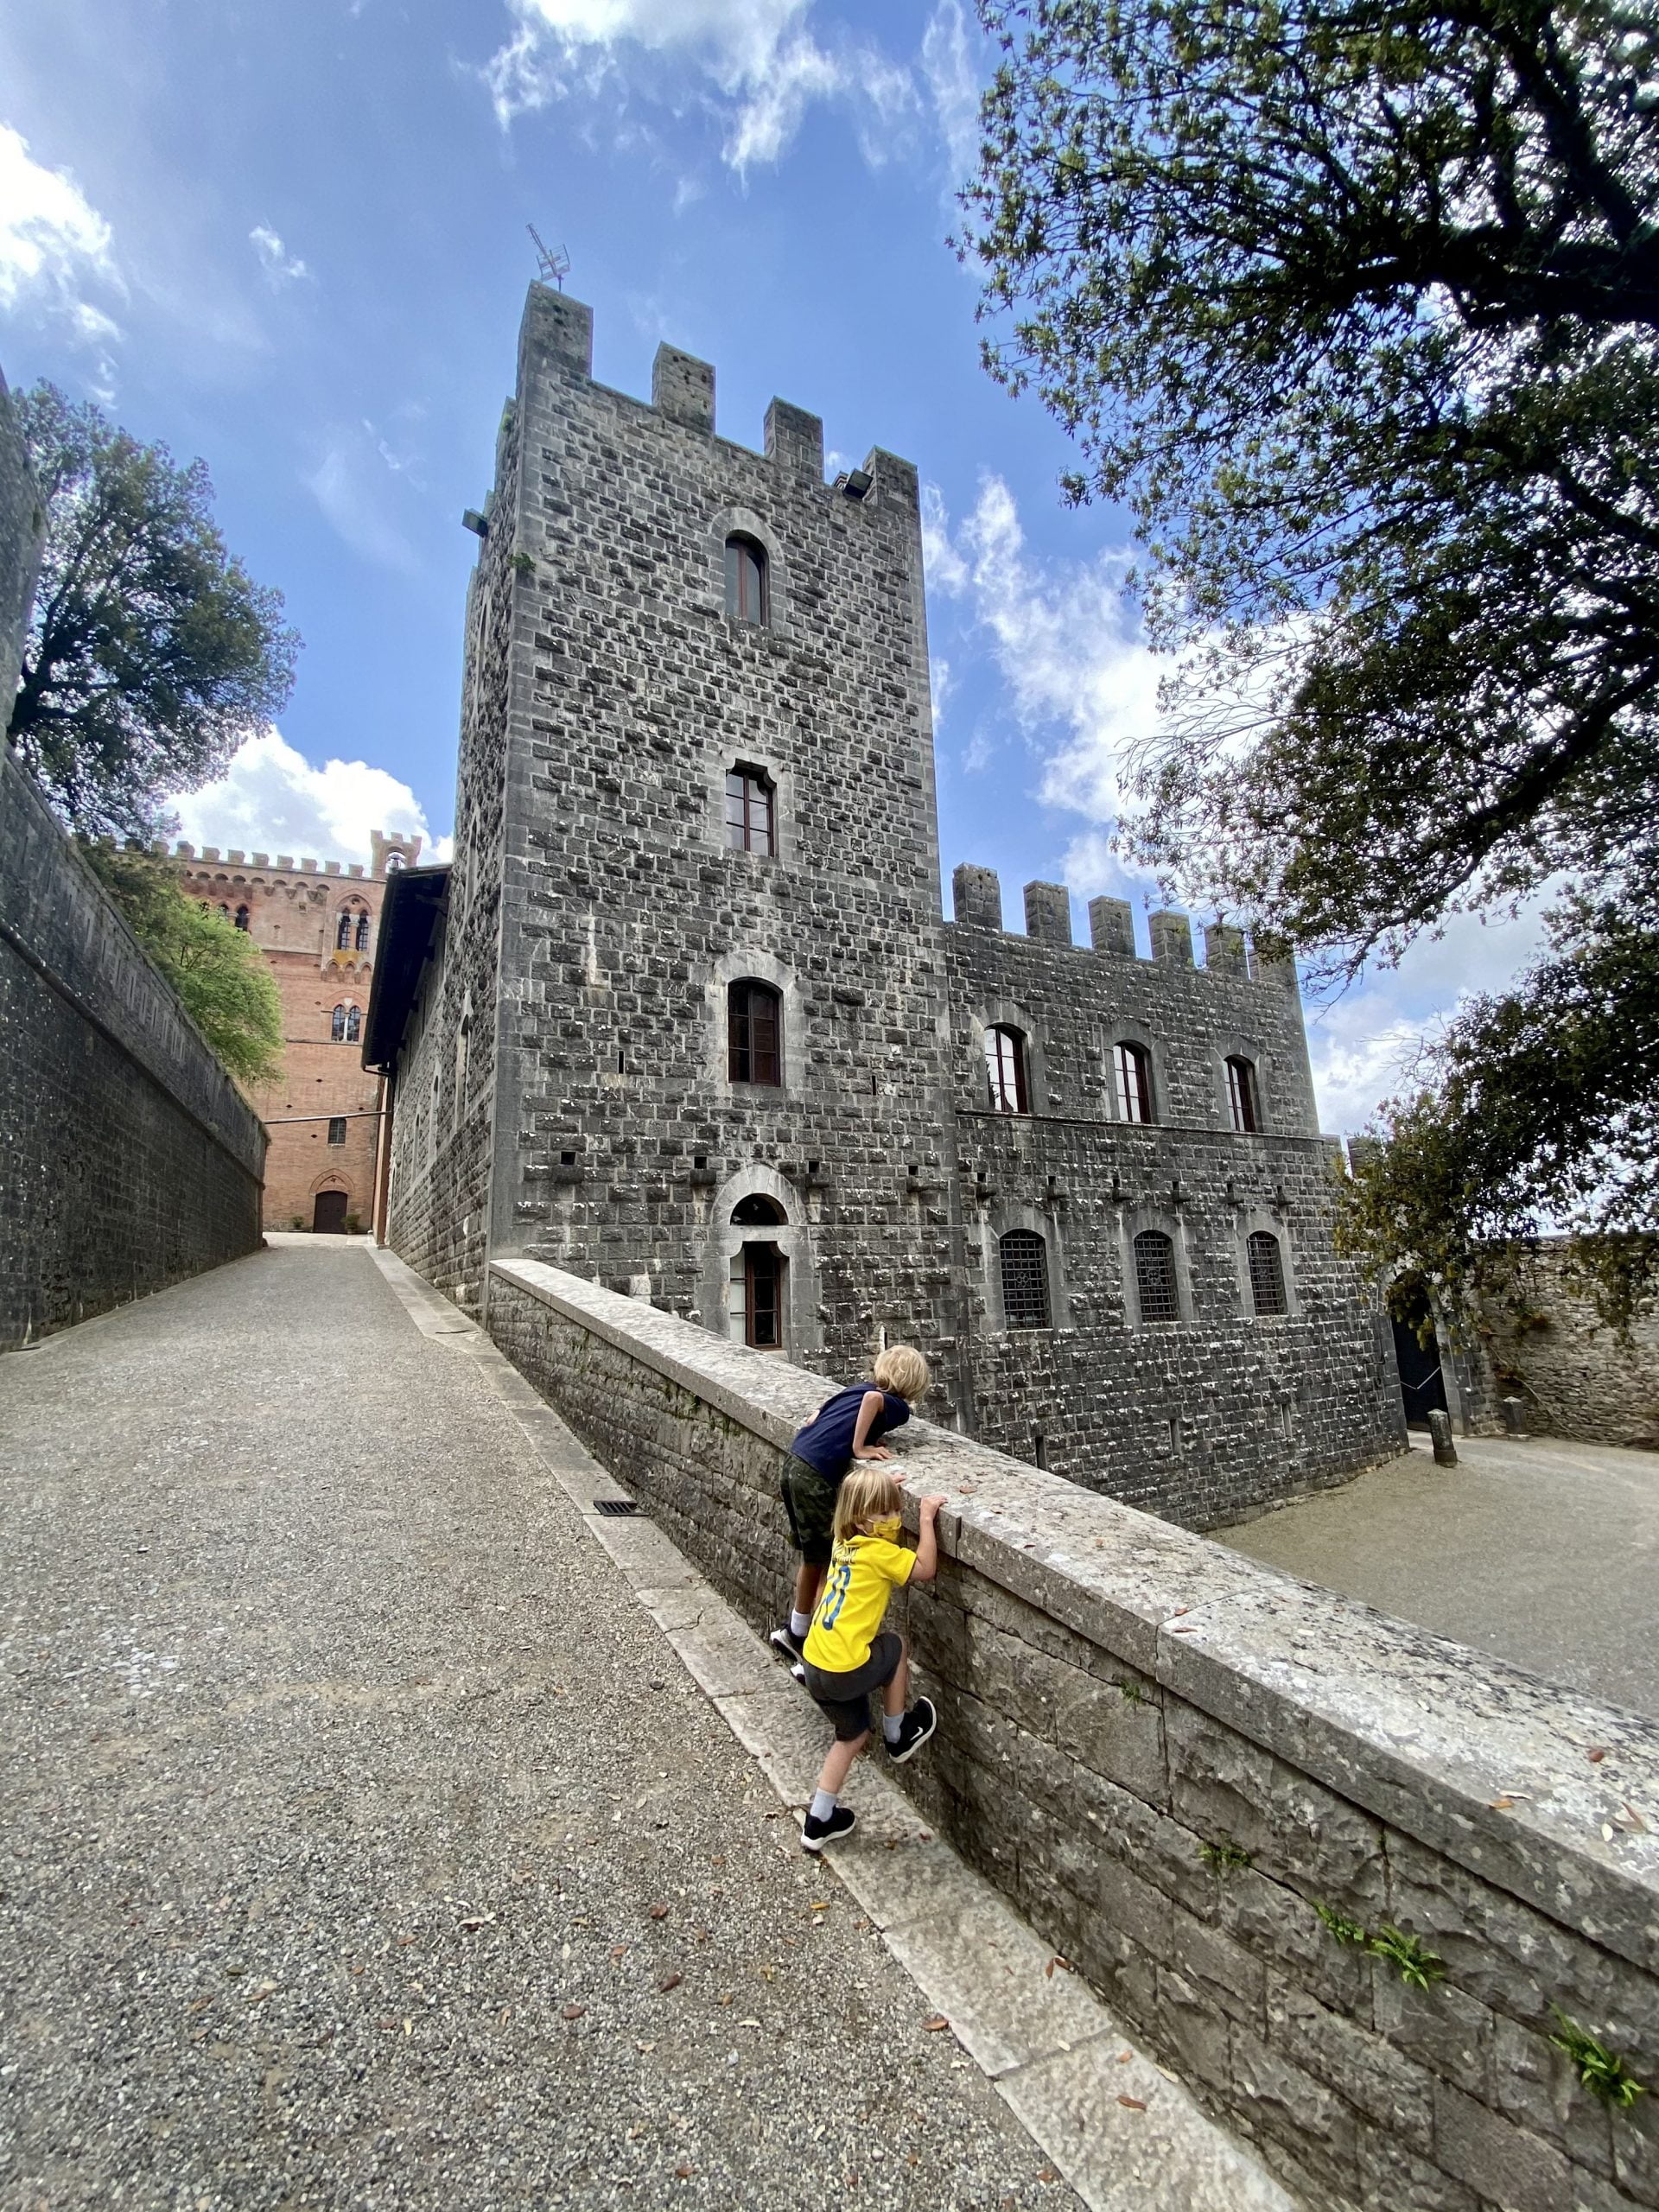 Boys looking at Brolio castle (Castello di Brolio) from a small wall